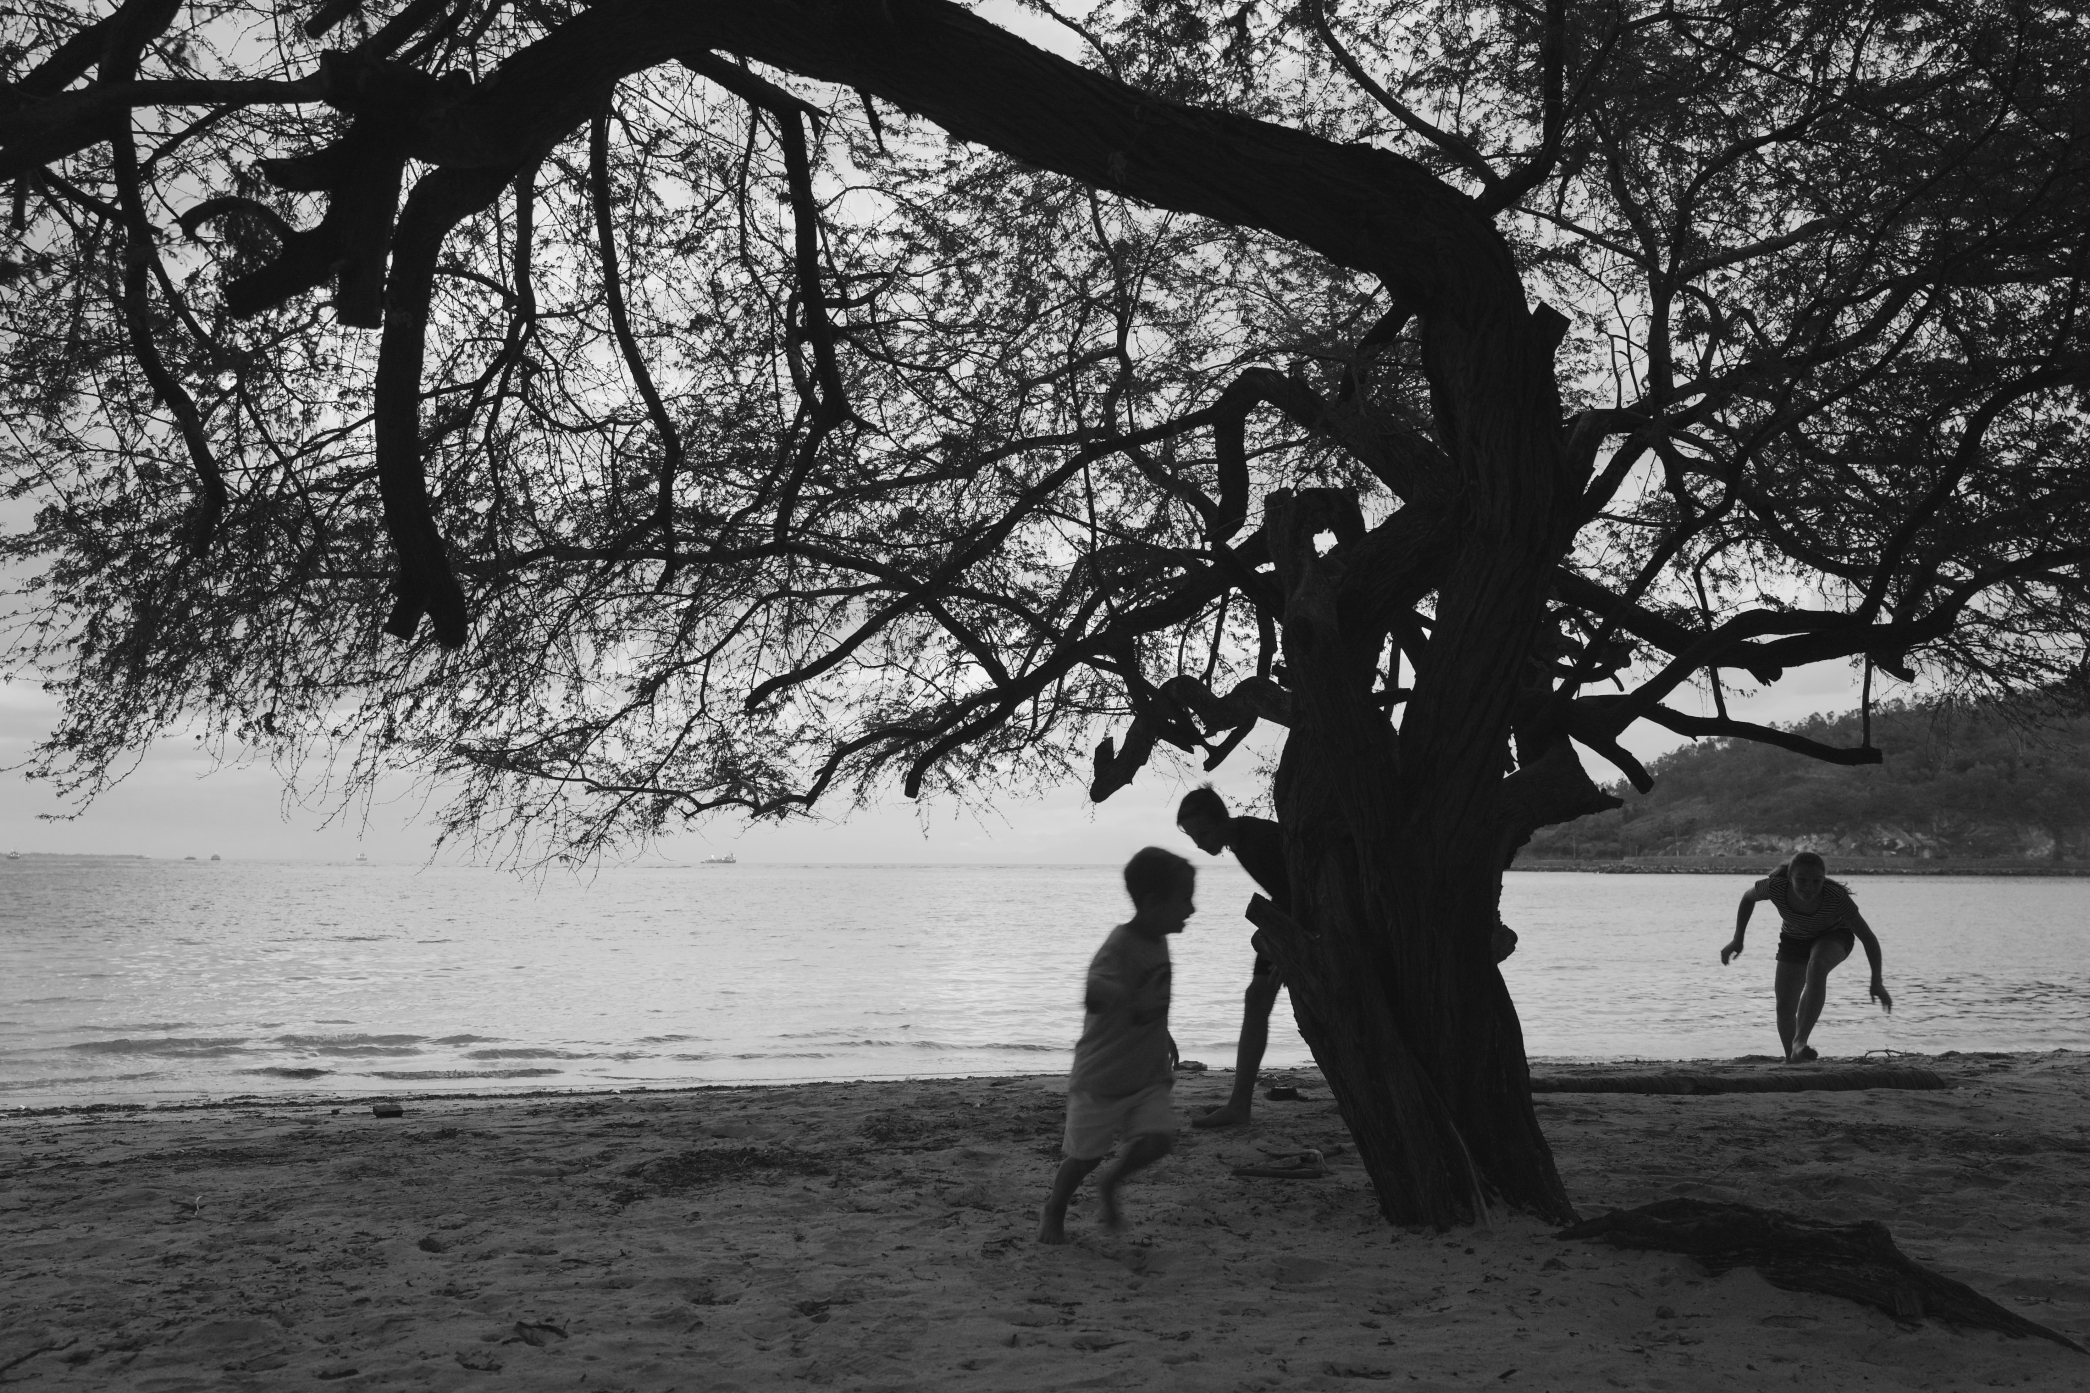 Children at play in Areia Branca in Dili, Timor-Leste (Photo: Telibert Laoc) 